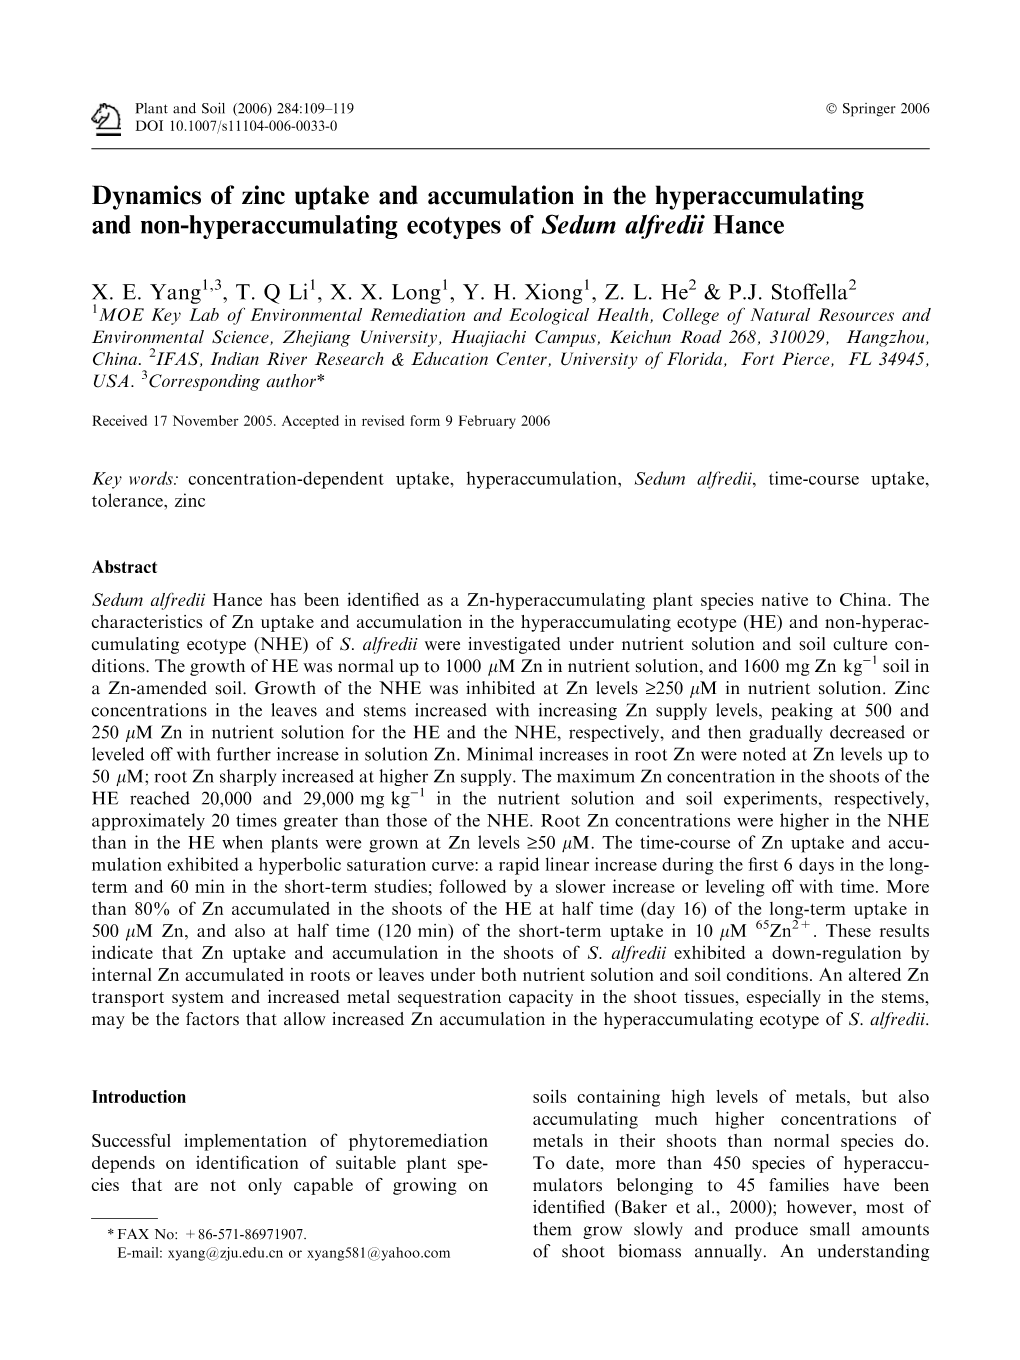 Dynamics of Zinc Uptake and Accumulation in the Hyperaccumulating and Non-Hyperaccumulating Ecotypes of Sedum Alfredii Hance